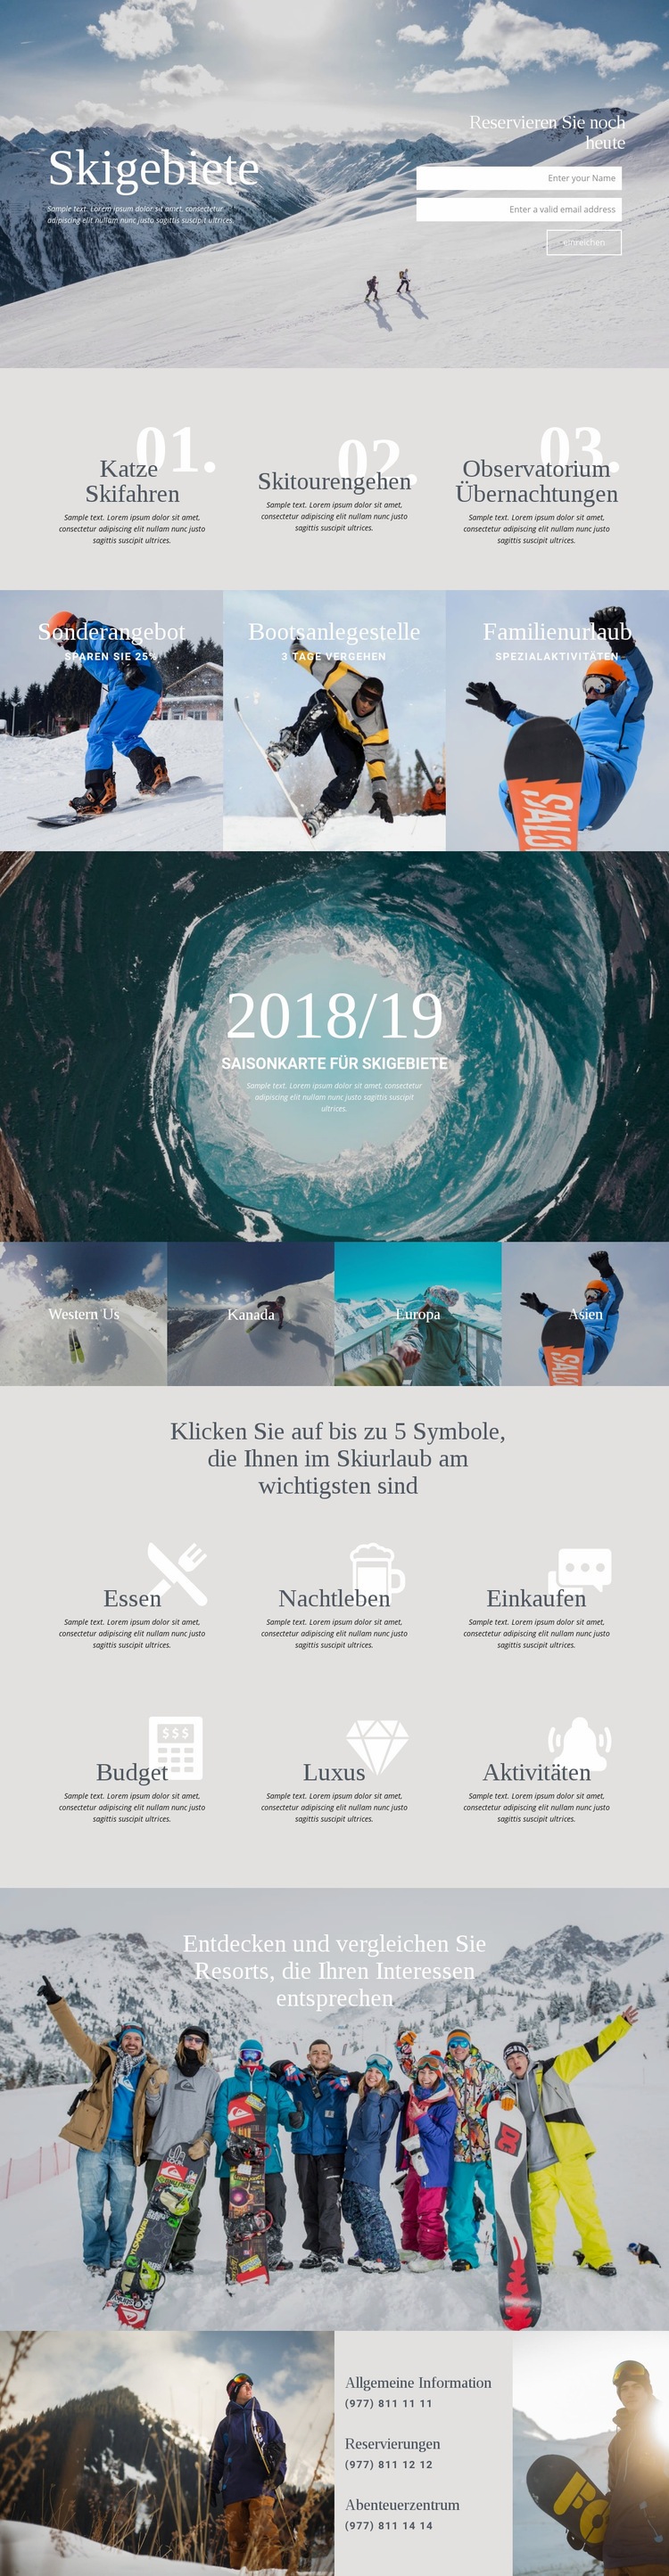 Skigebiete Website-Modell